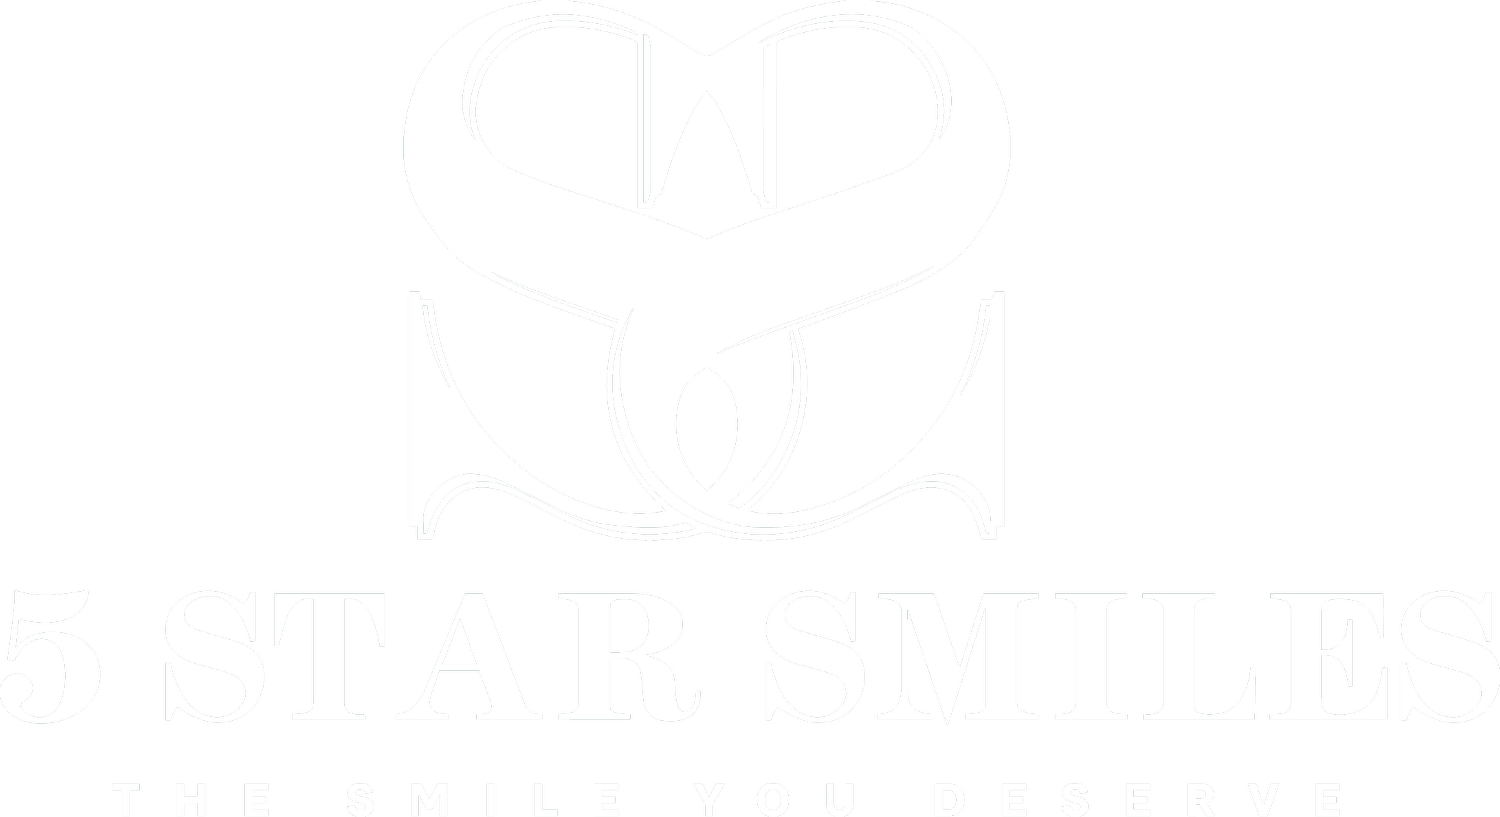 5 Star Smiles